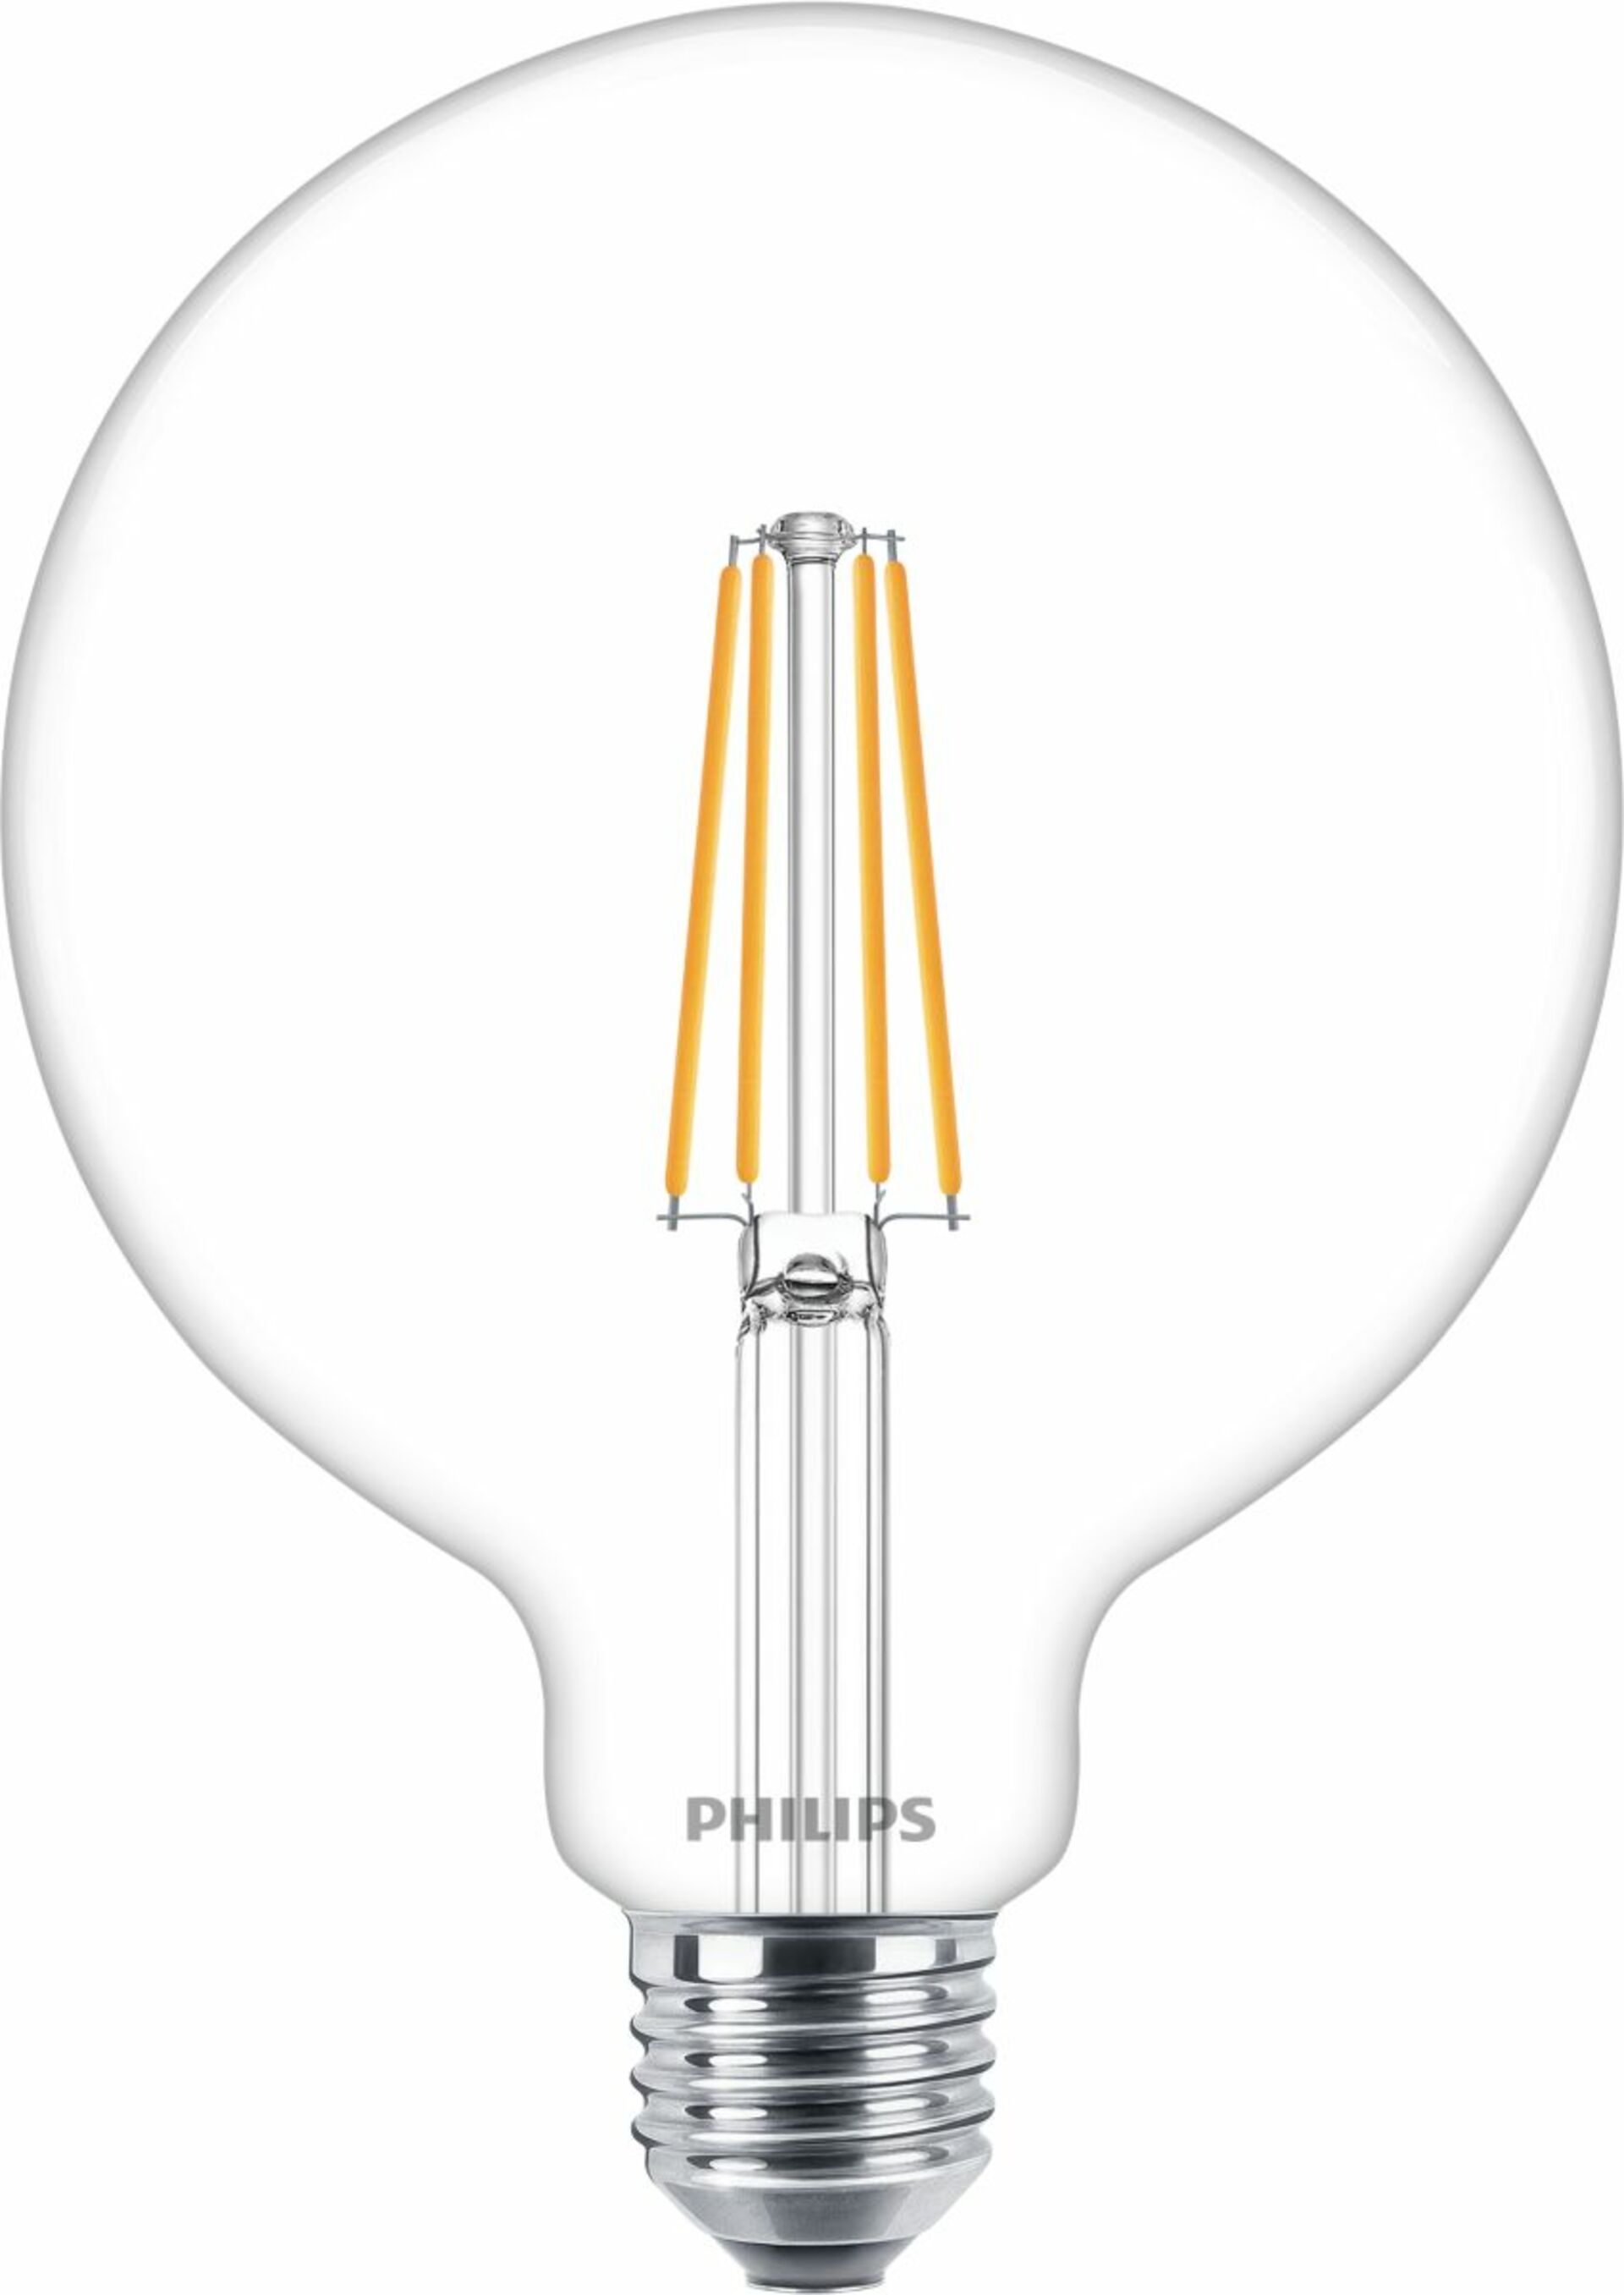 Philips MASTER Value LEDBulb D 5.9-60W E27 927 G120 CLEAR GLASS